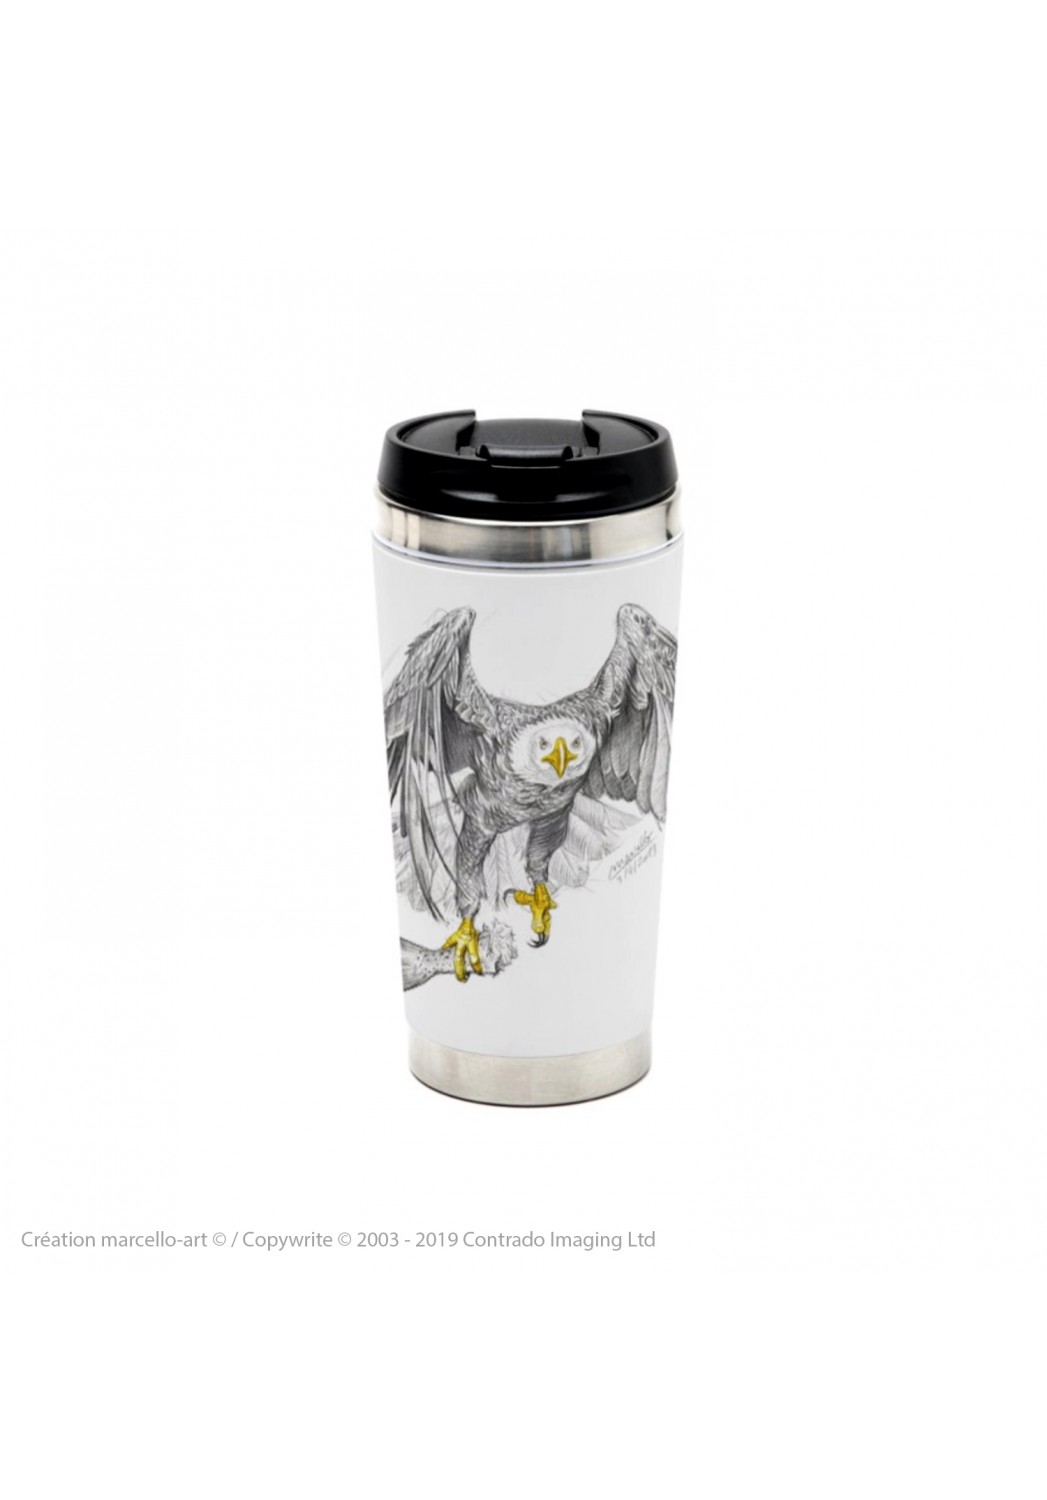 Marcello-art: Decoration accessoiries Thermos mug 393 bald eagle